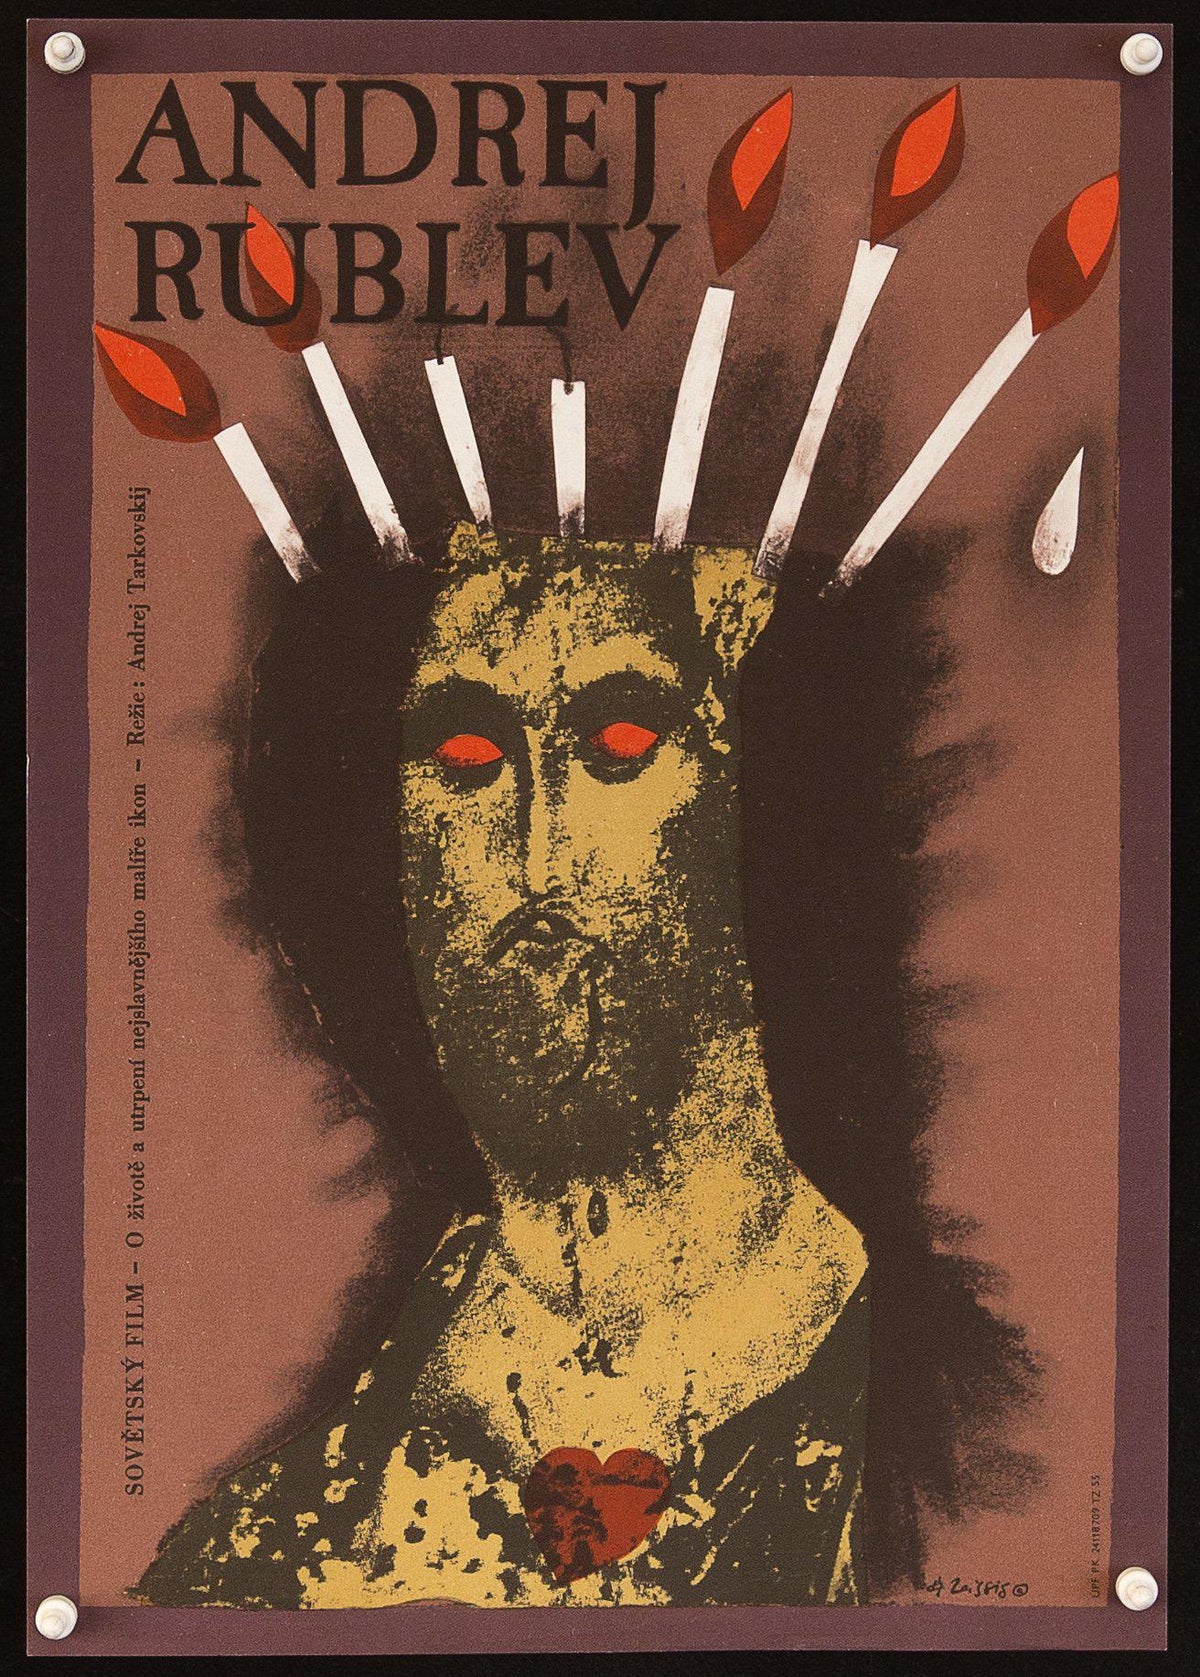 Andrei Rublev Czech mini (11x16) Original Vintage Movie Poster